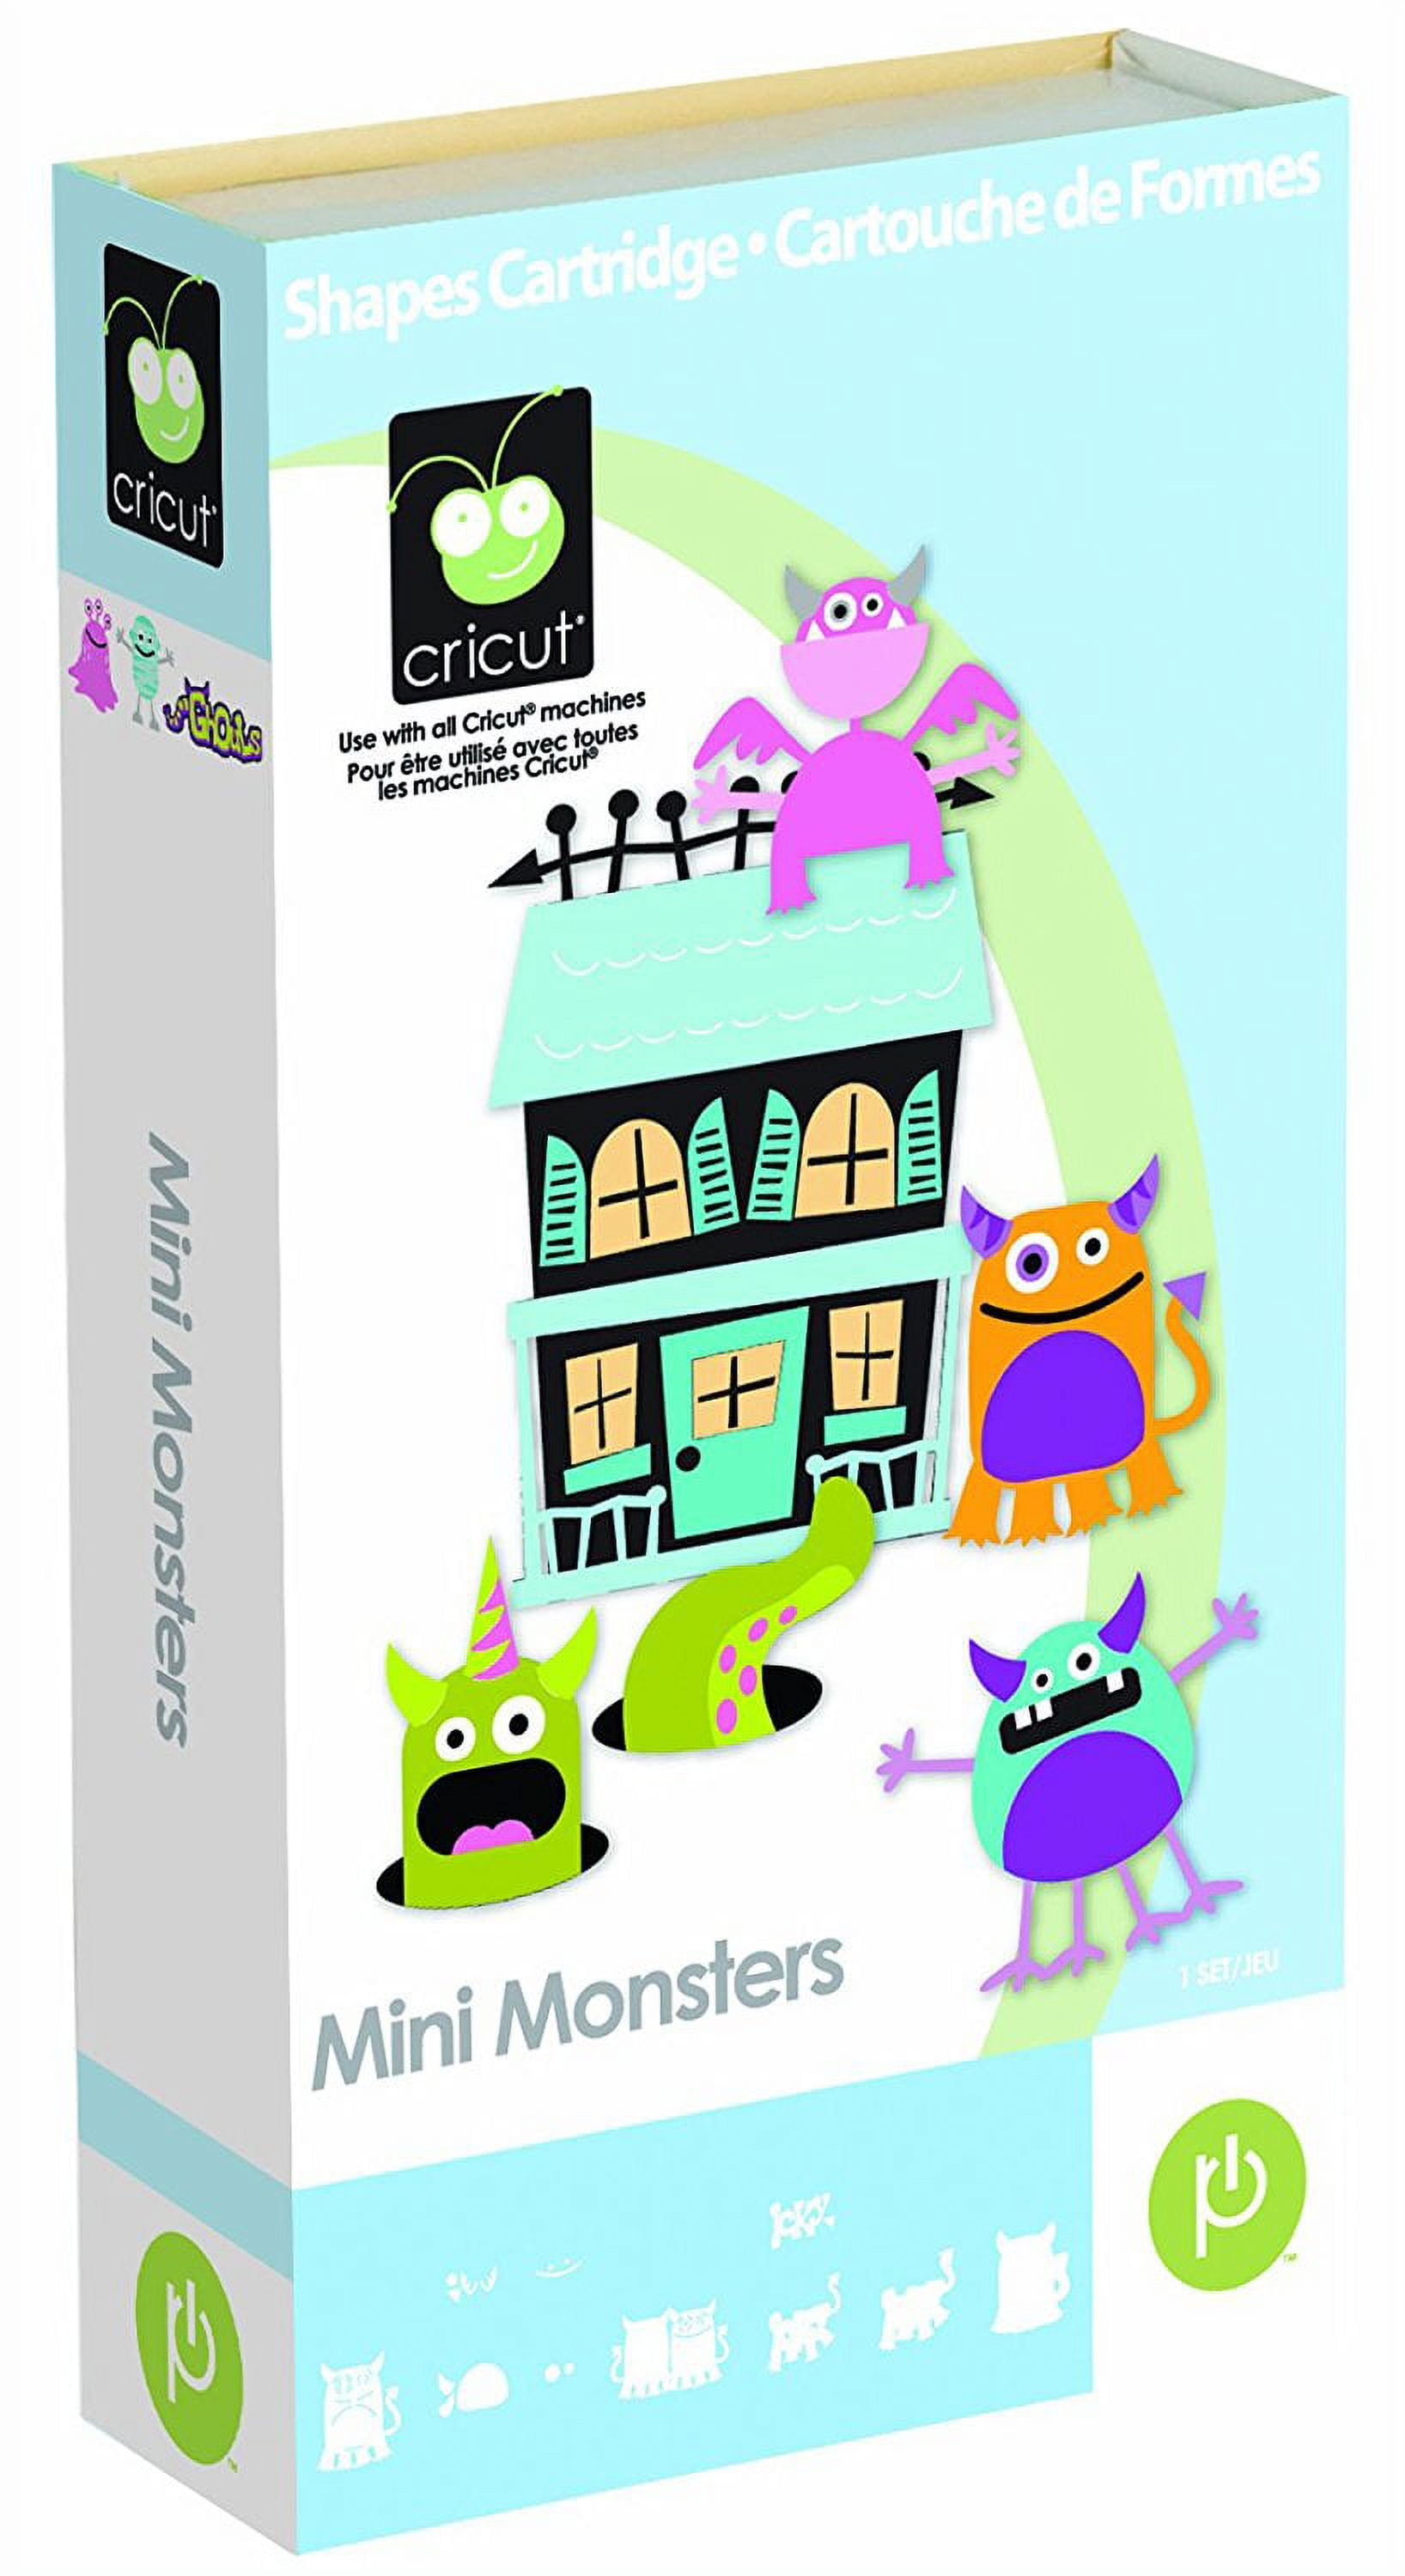 5 Little Monsters: How to Use the Cricut Mug Press